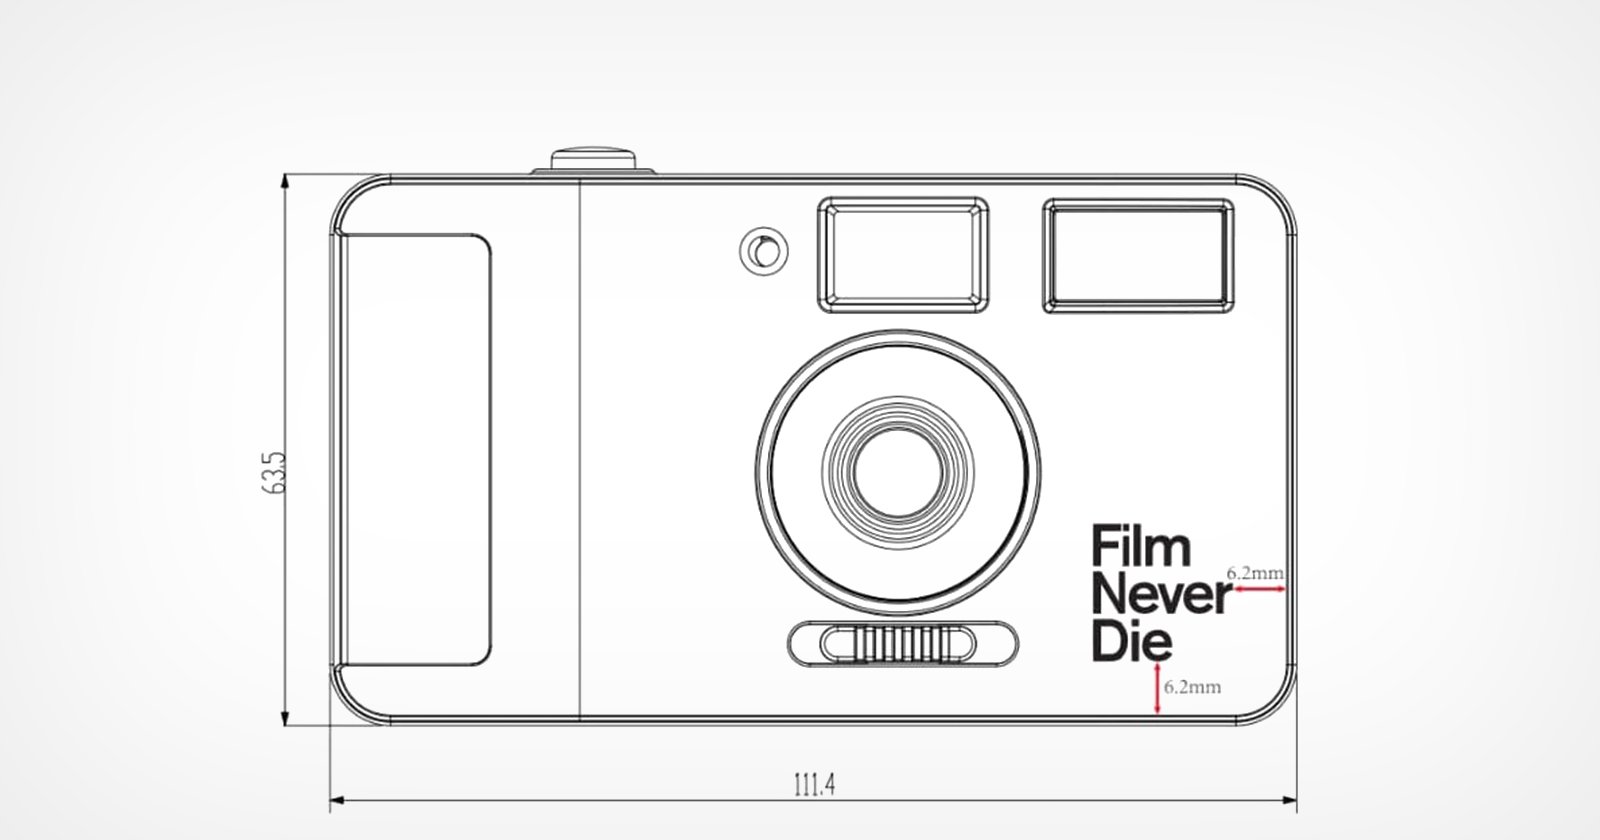  filmneverdie announces nana next-gen reusable 35mm camera 